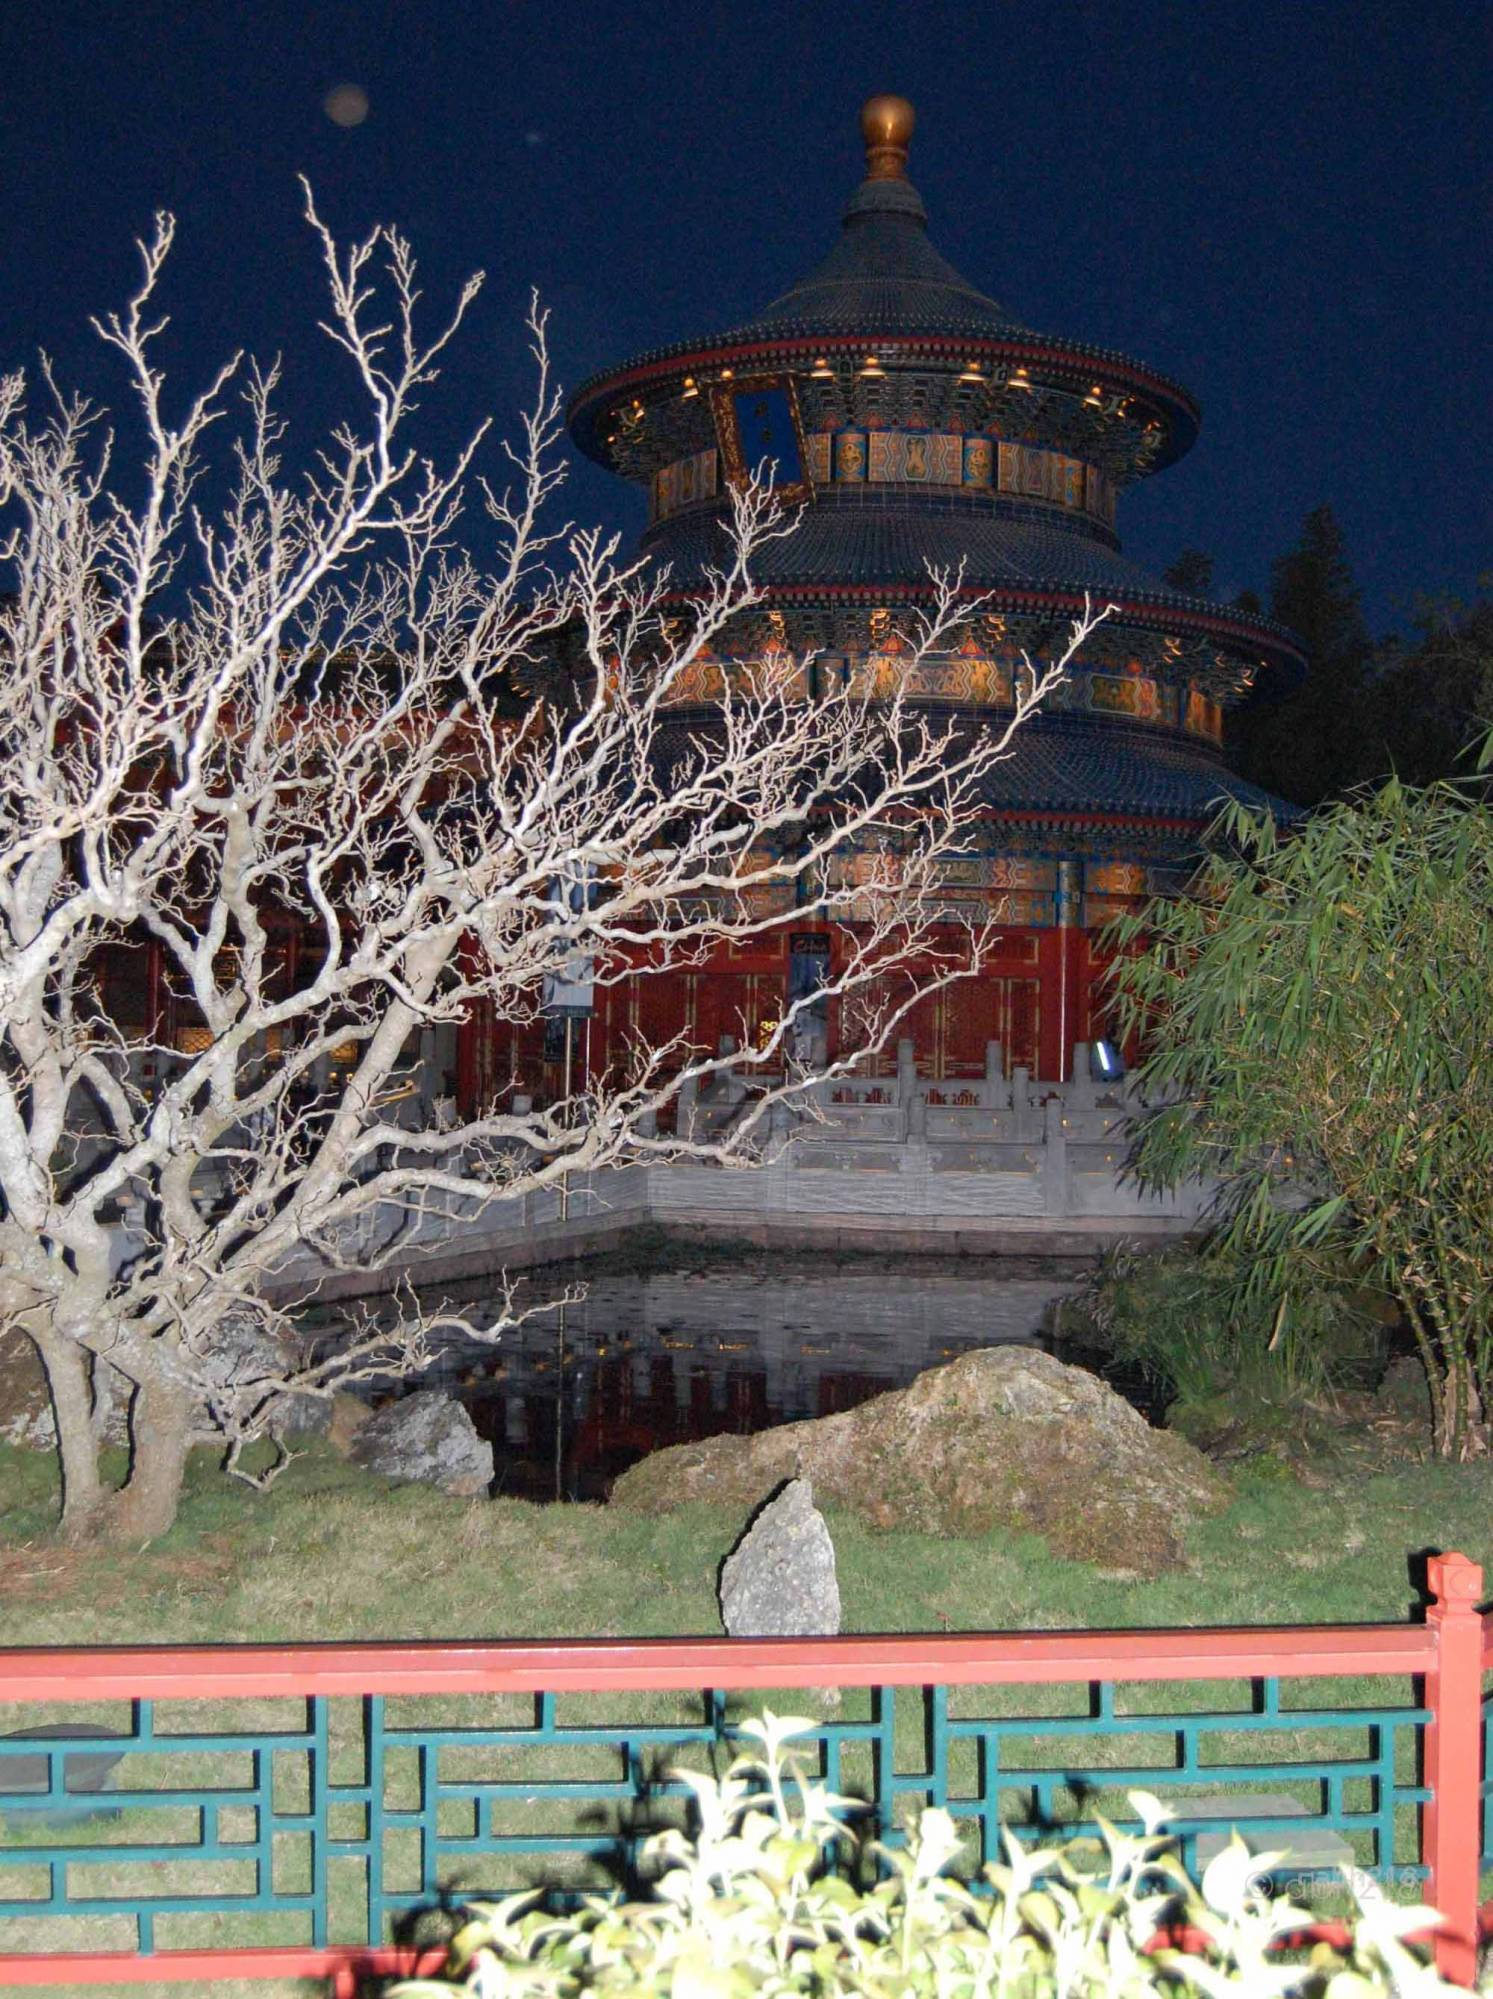 China Pavilion at Night